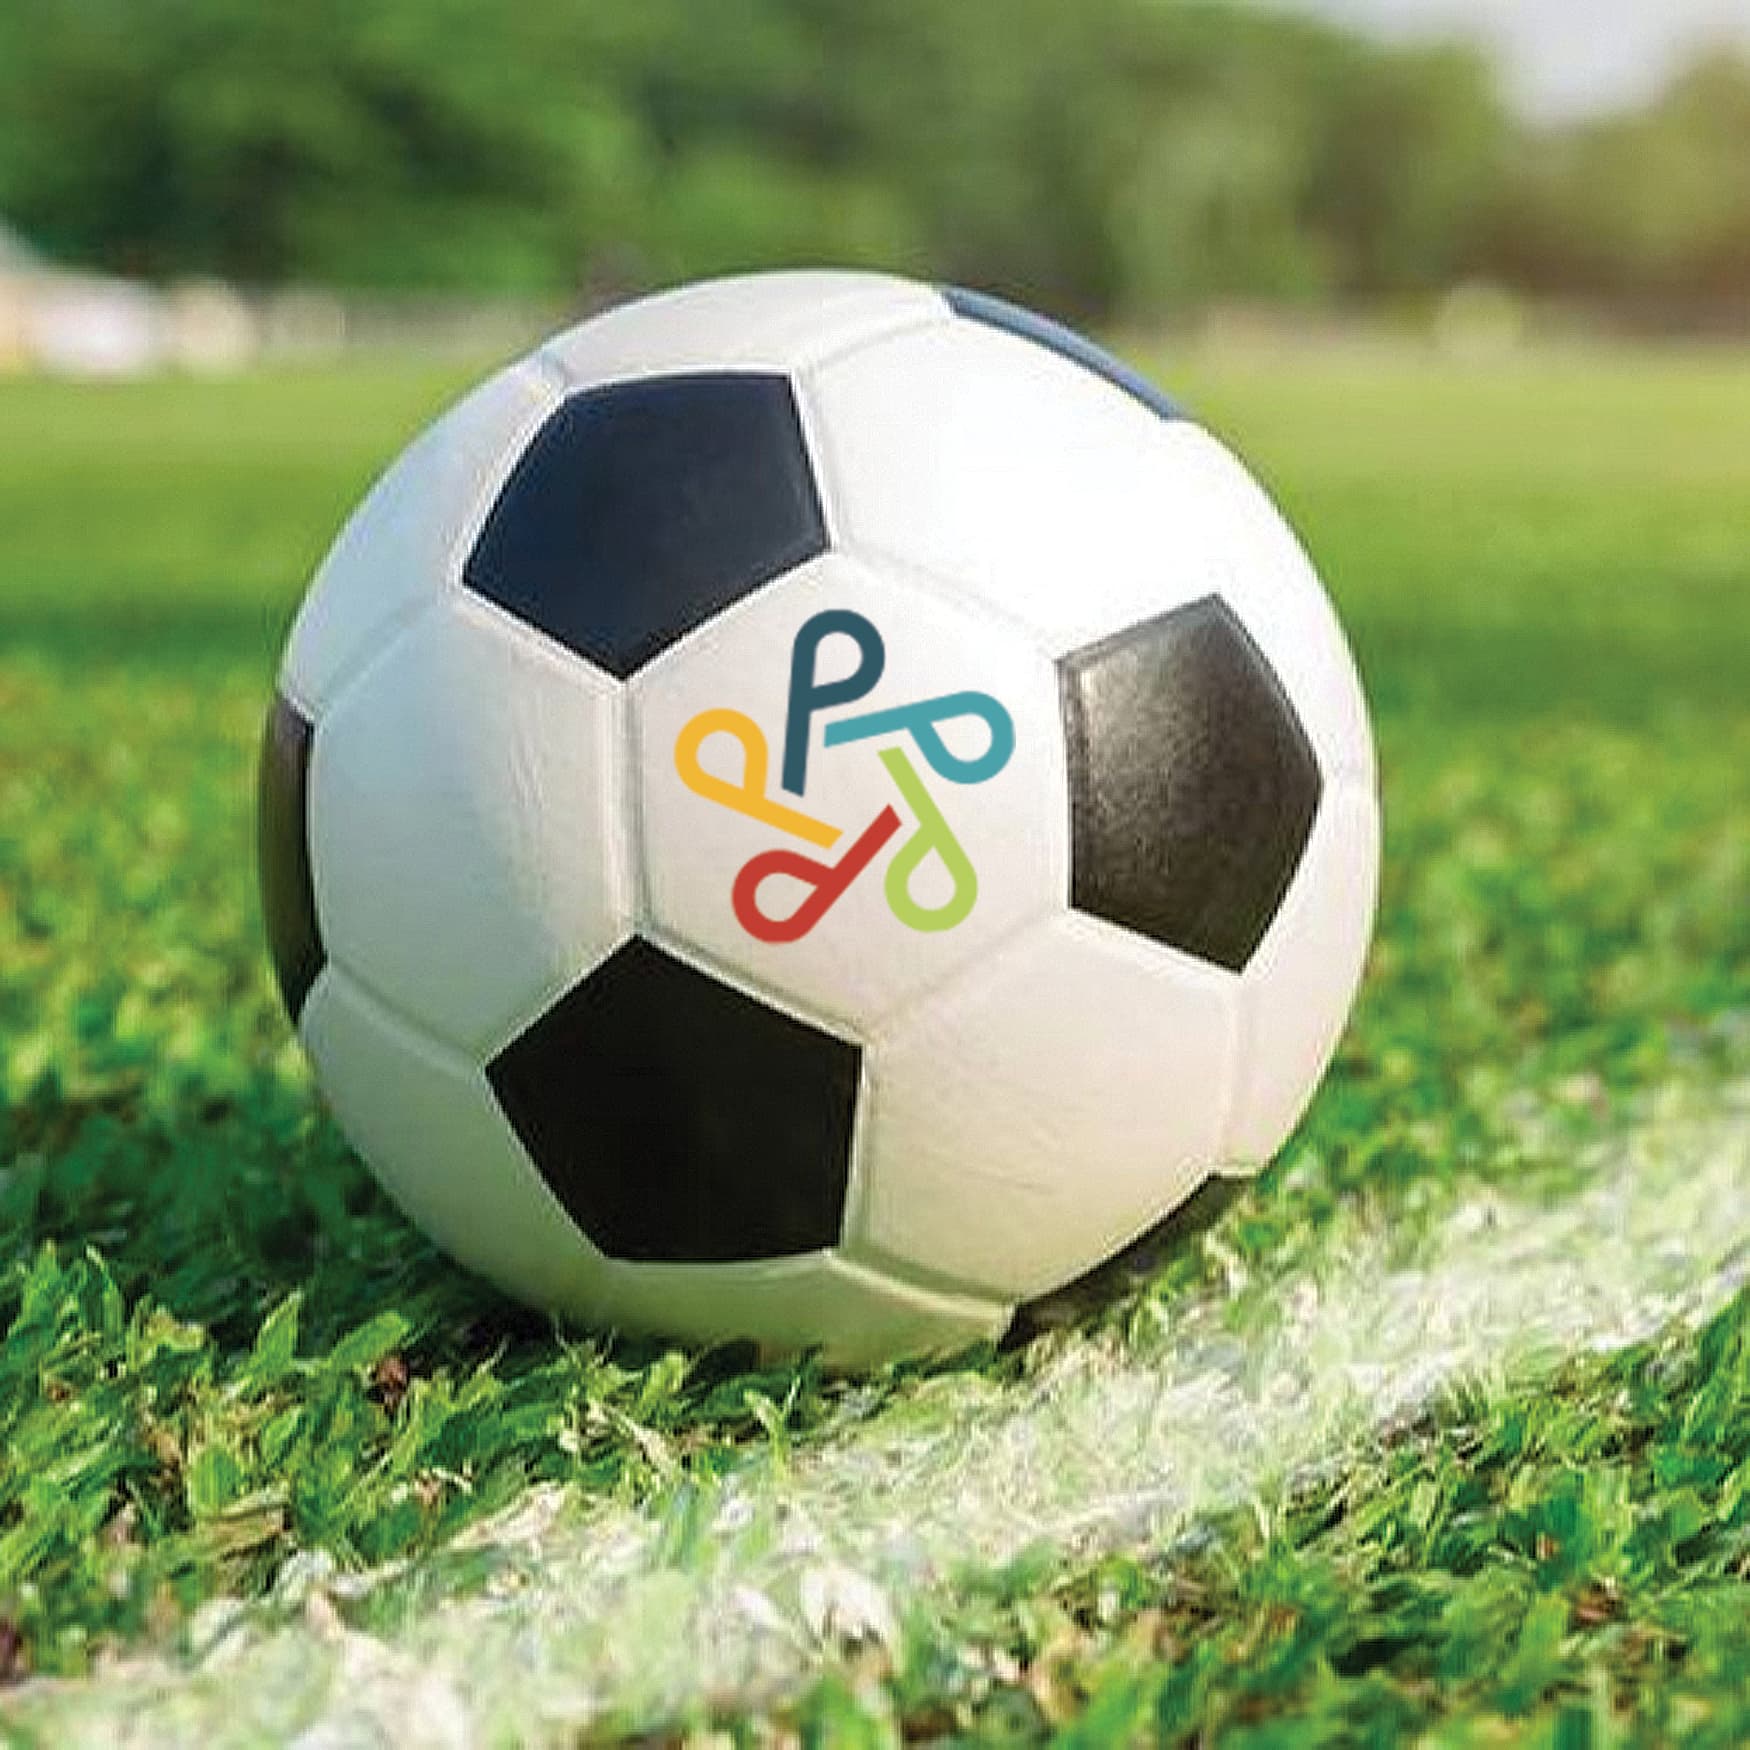 Paragon Star Branding application on soccer ball.